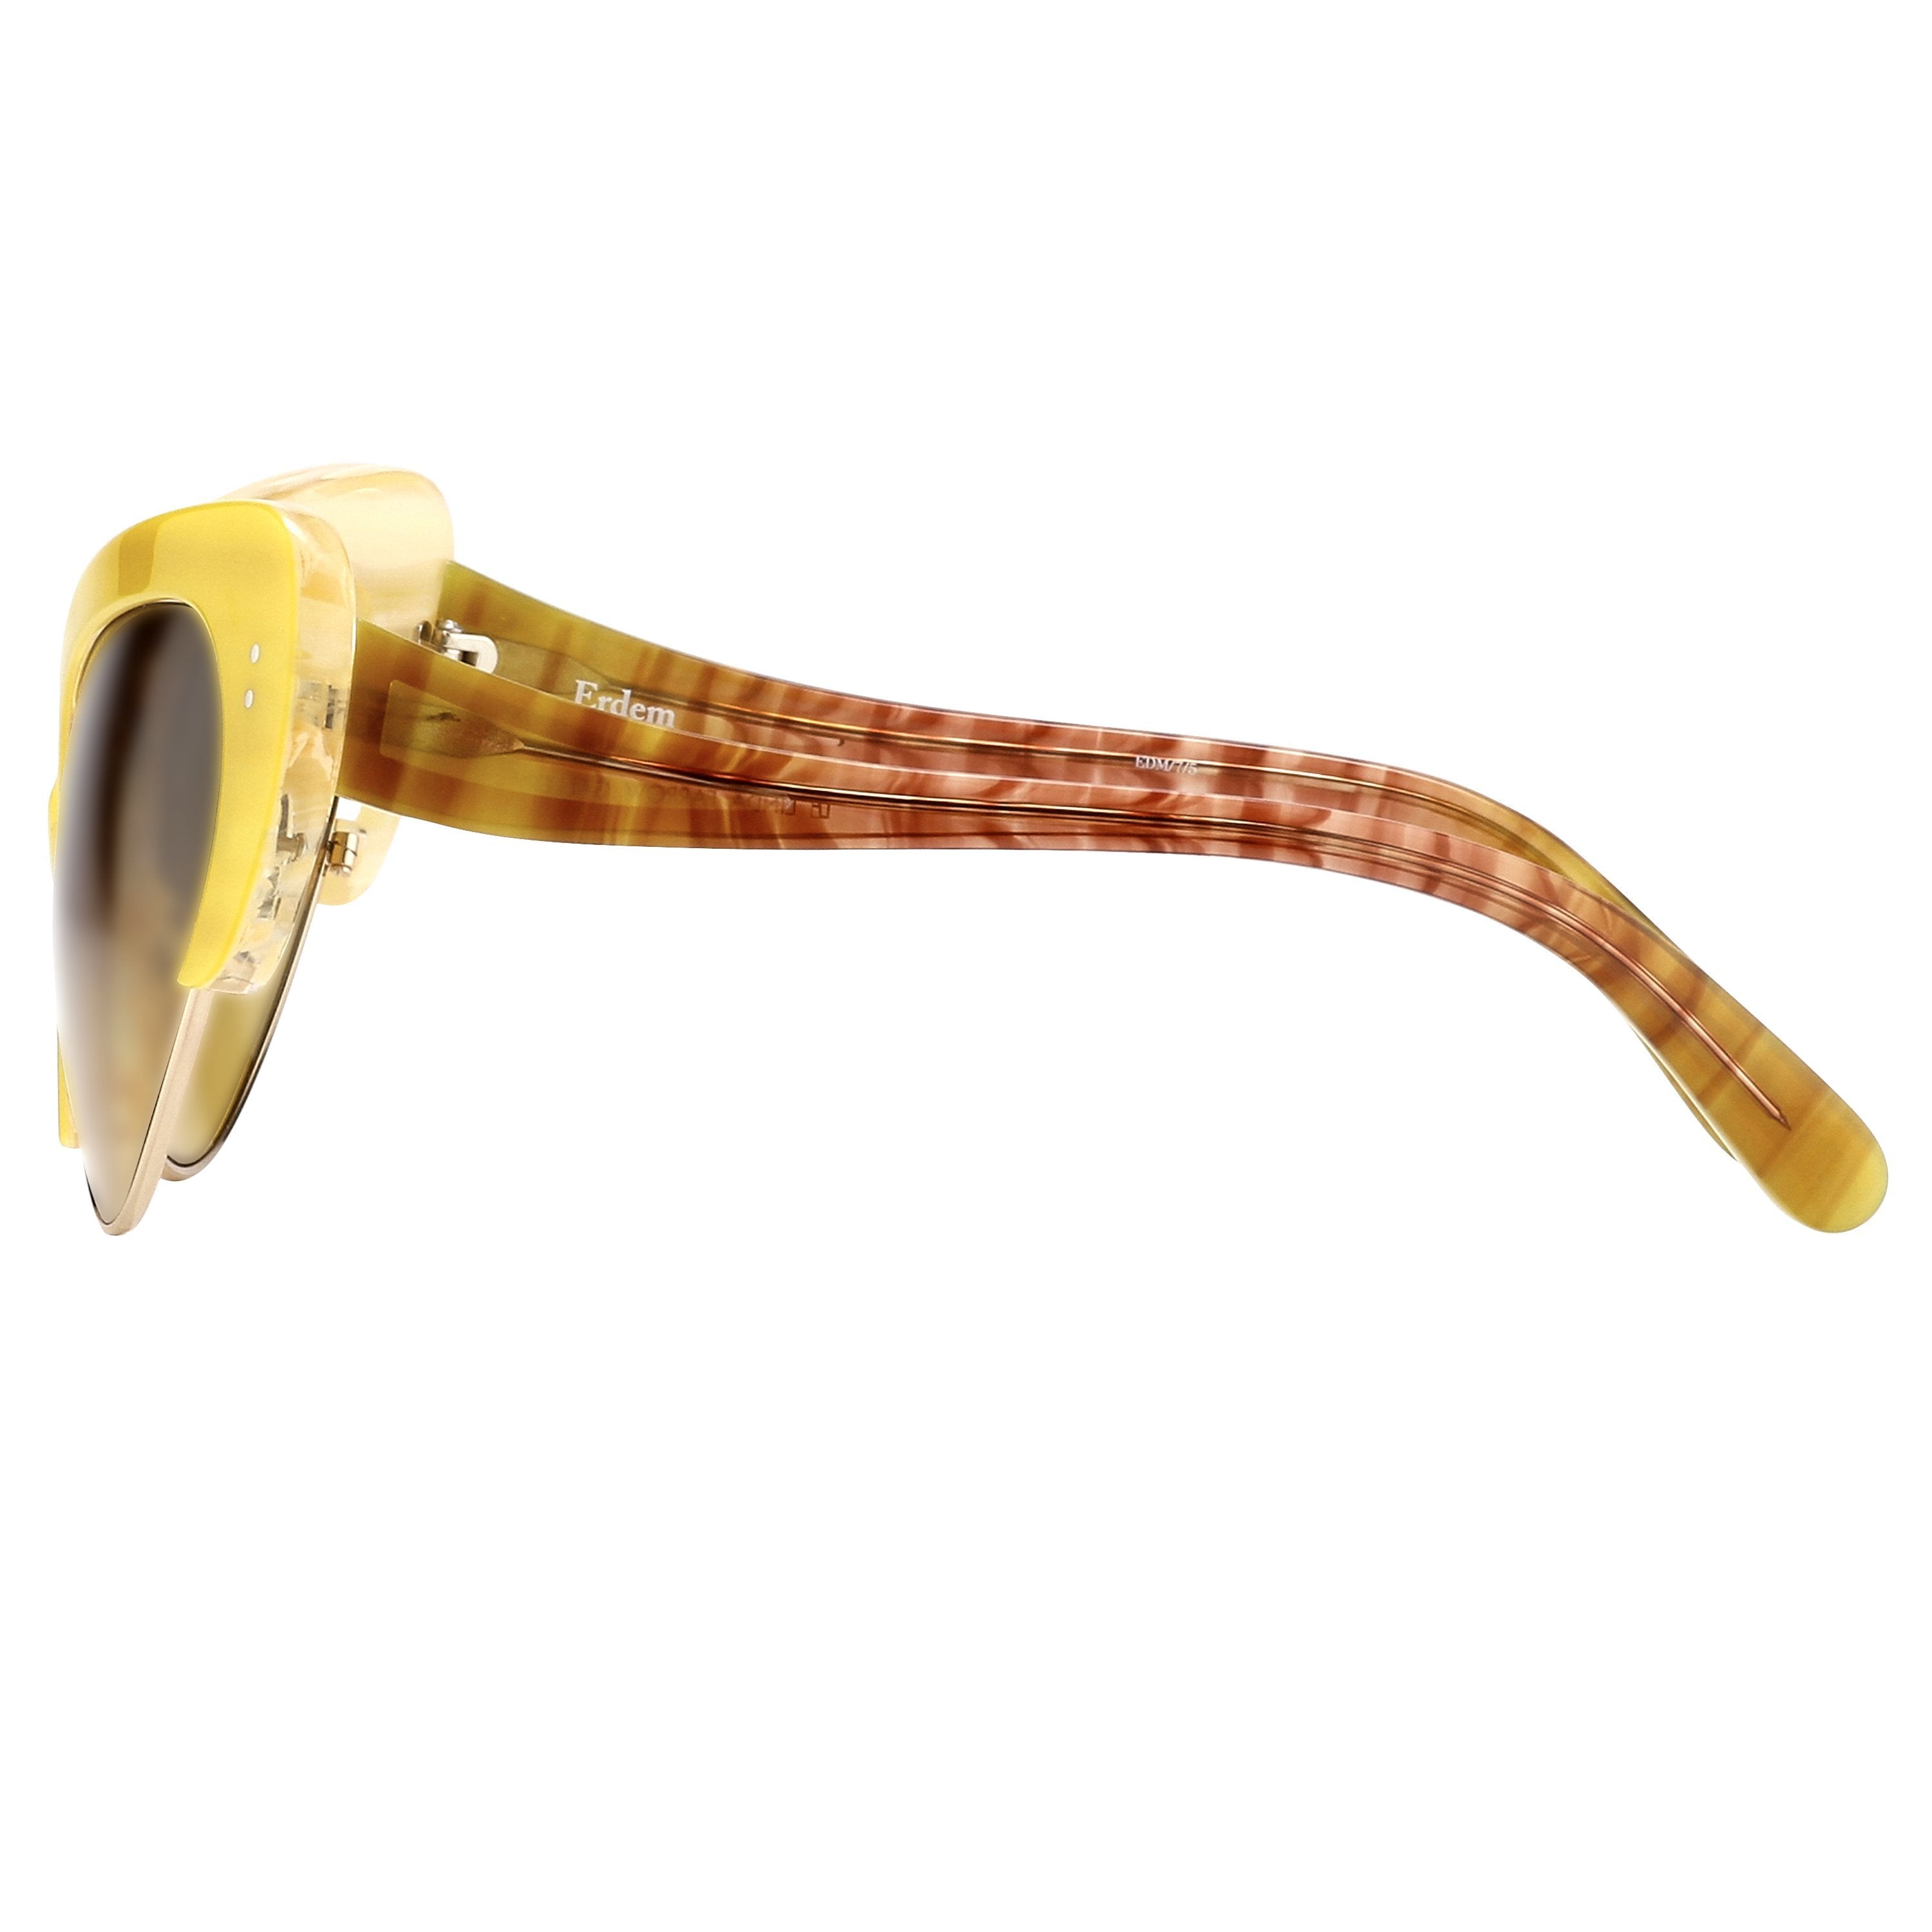 Color_EDM7C5SUN - Erdem 7 C5 Cat Eye Sunglasses